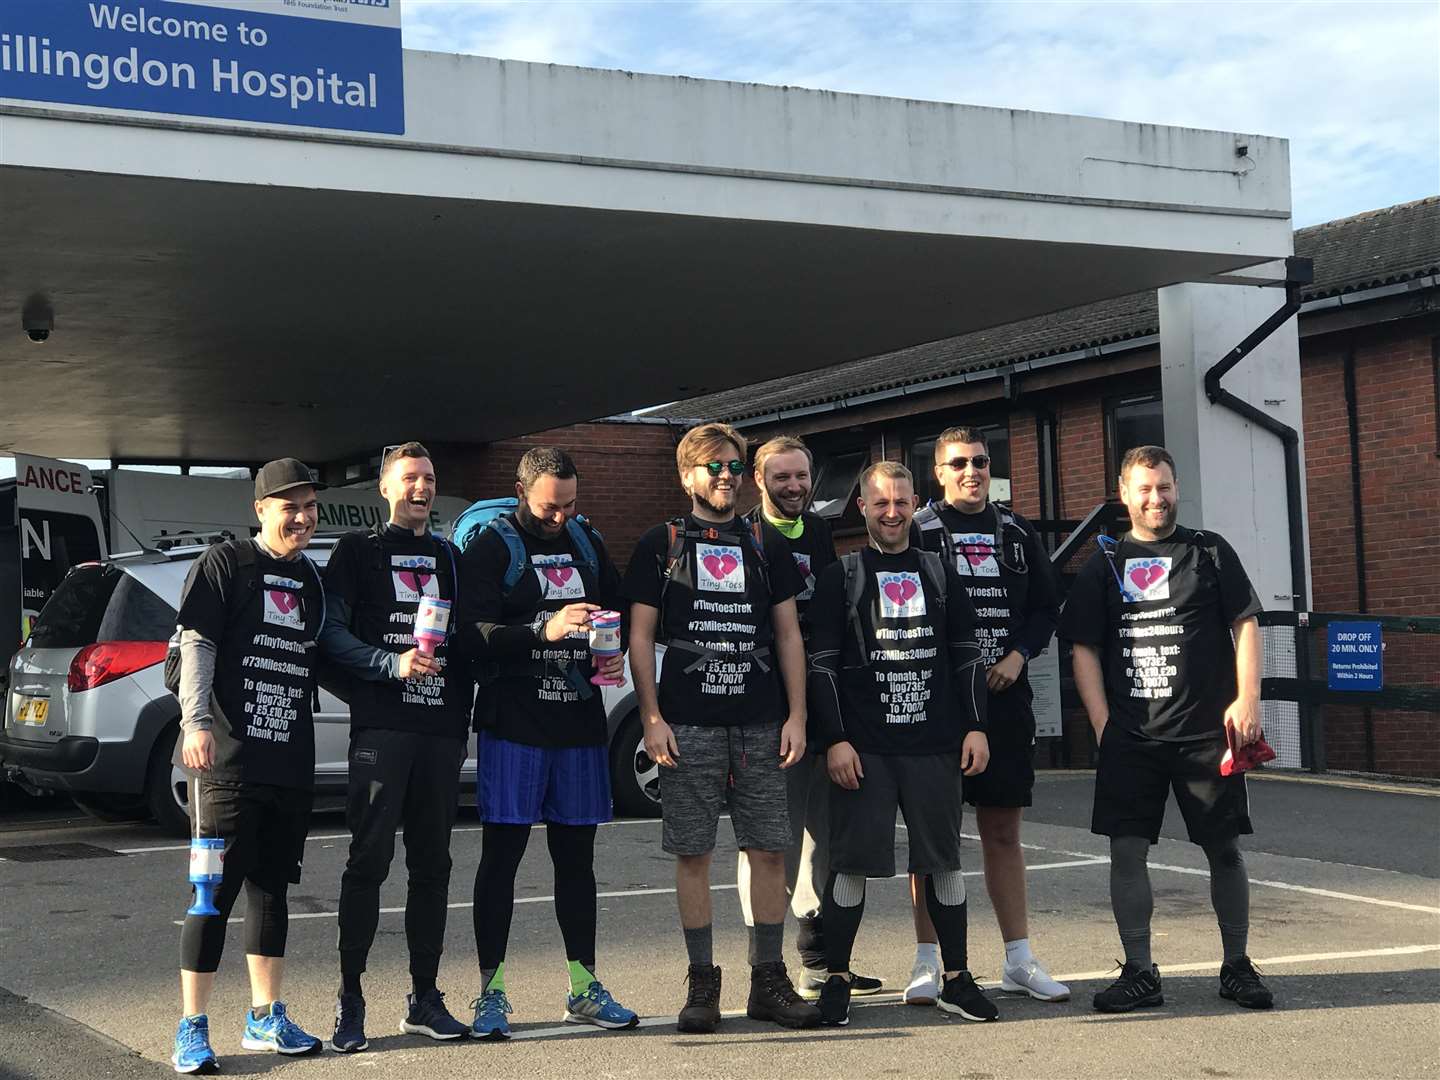 The team at the Hillingdon Hospital in Uxbridge